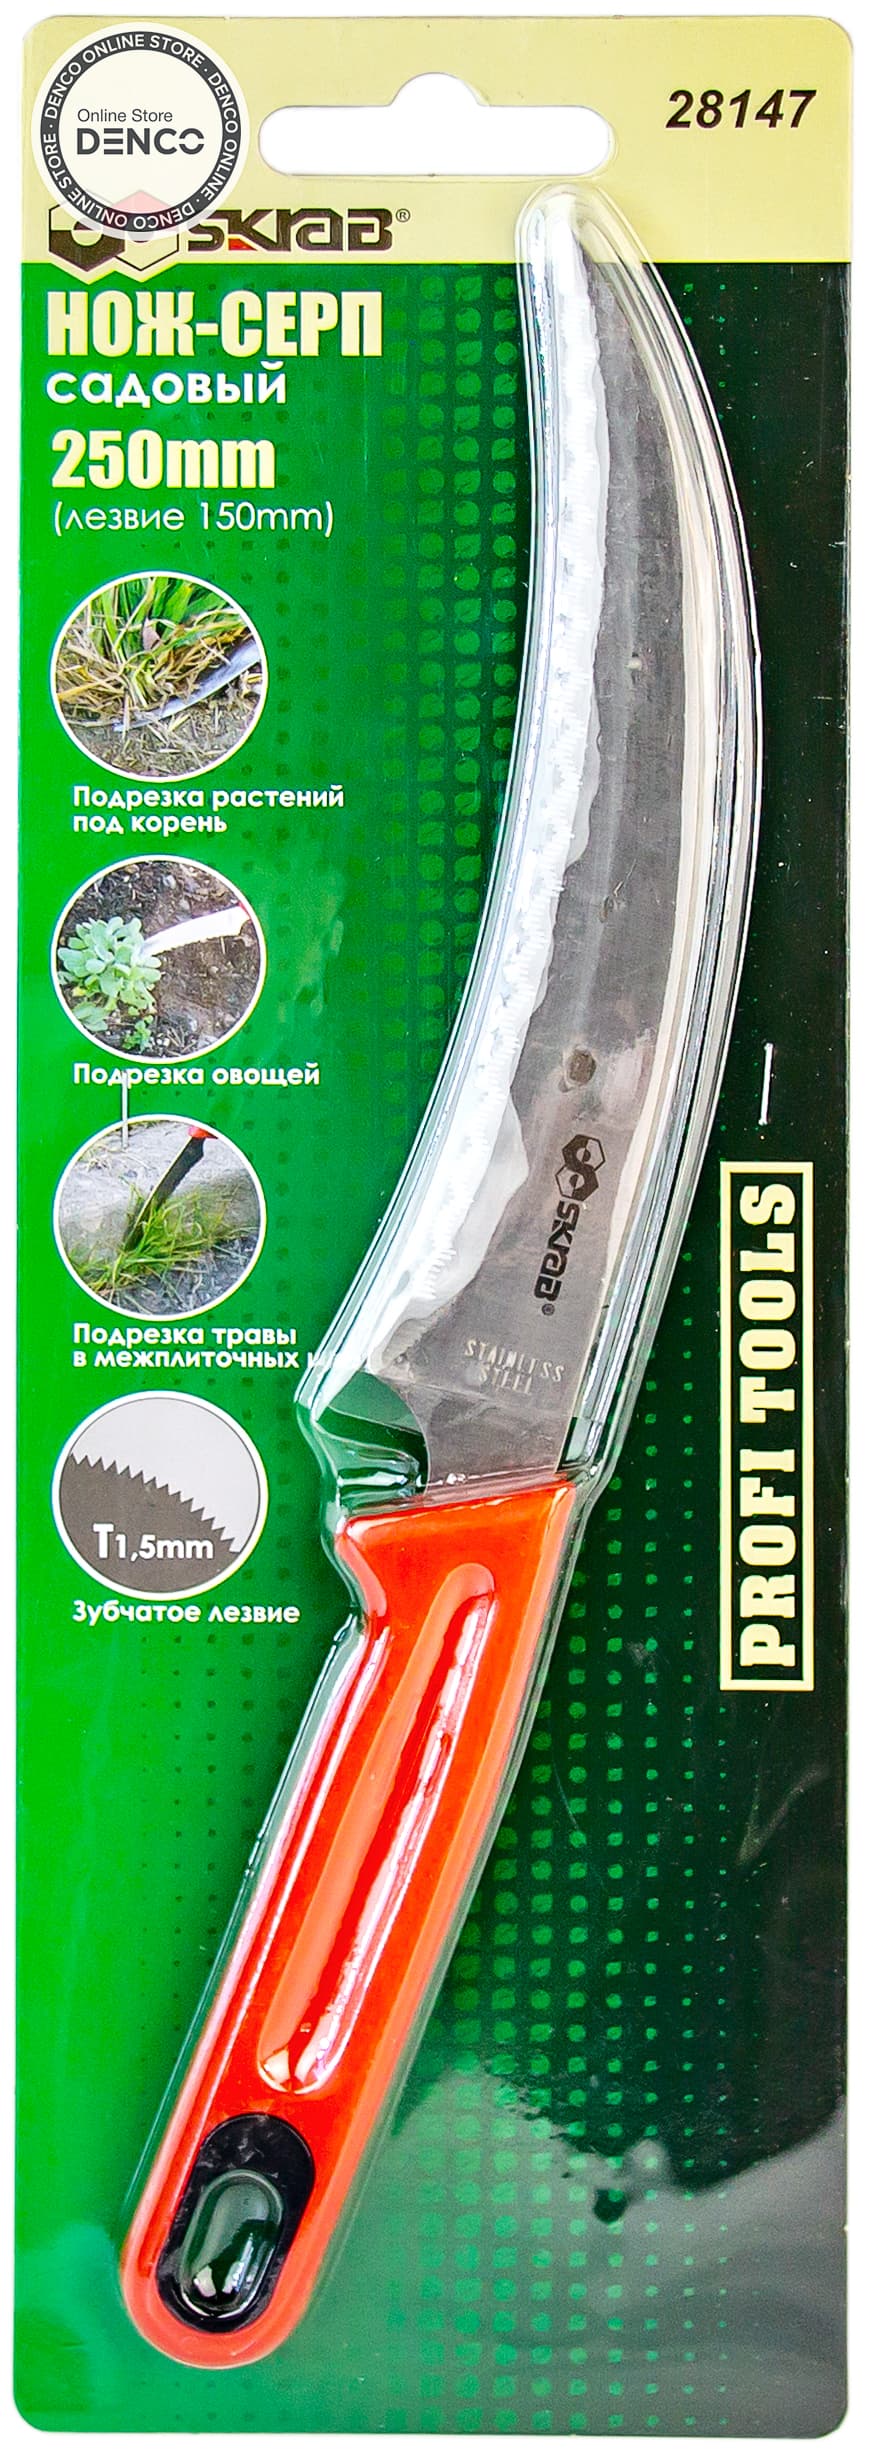 Нож-серп садовый Skrab 28147 зубчатый 250 мм.